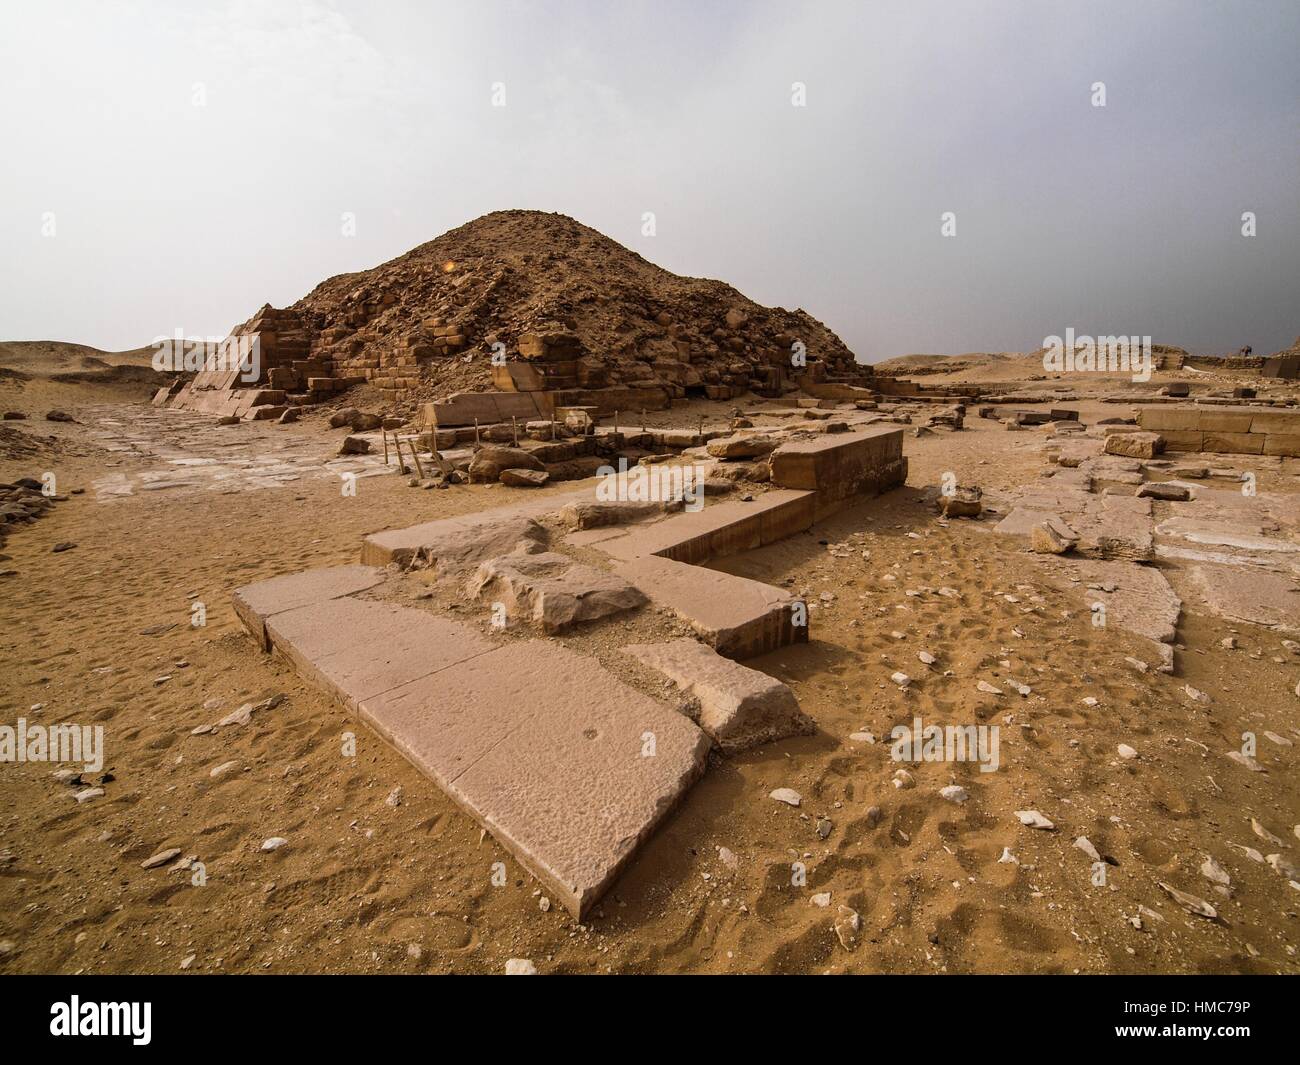 Pyramif de Anus. Los restos arqueológicos. La necrópolis de Saqqara. Egipto. Foto de stock